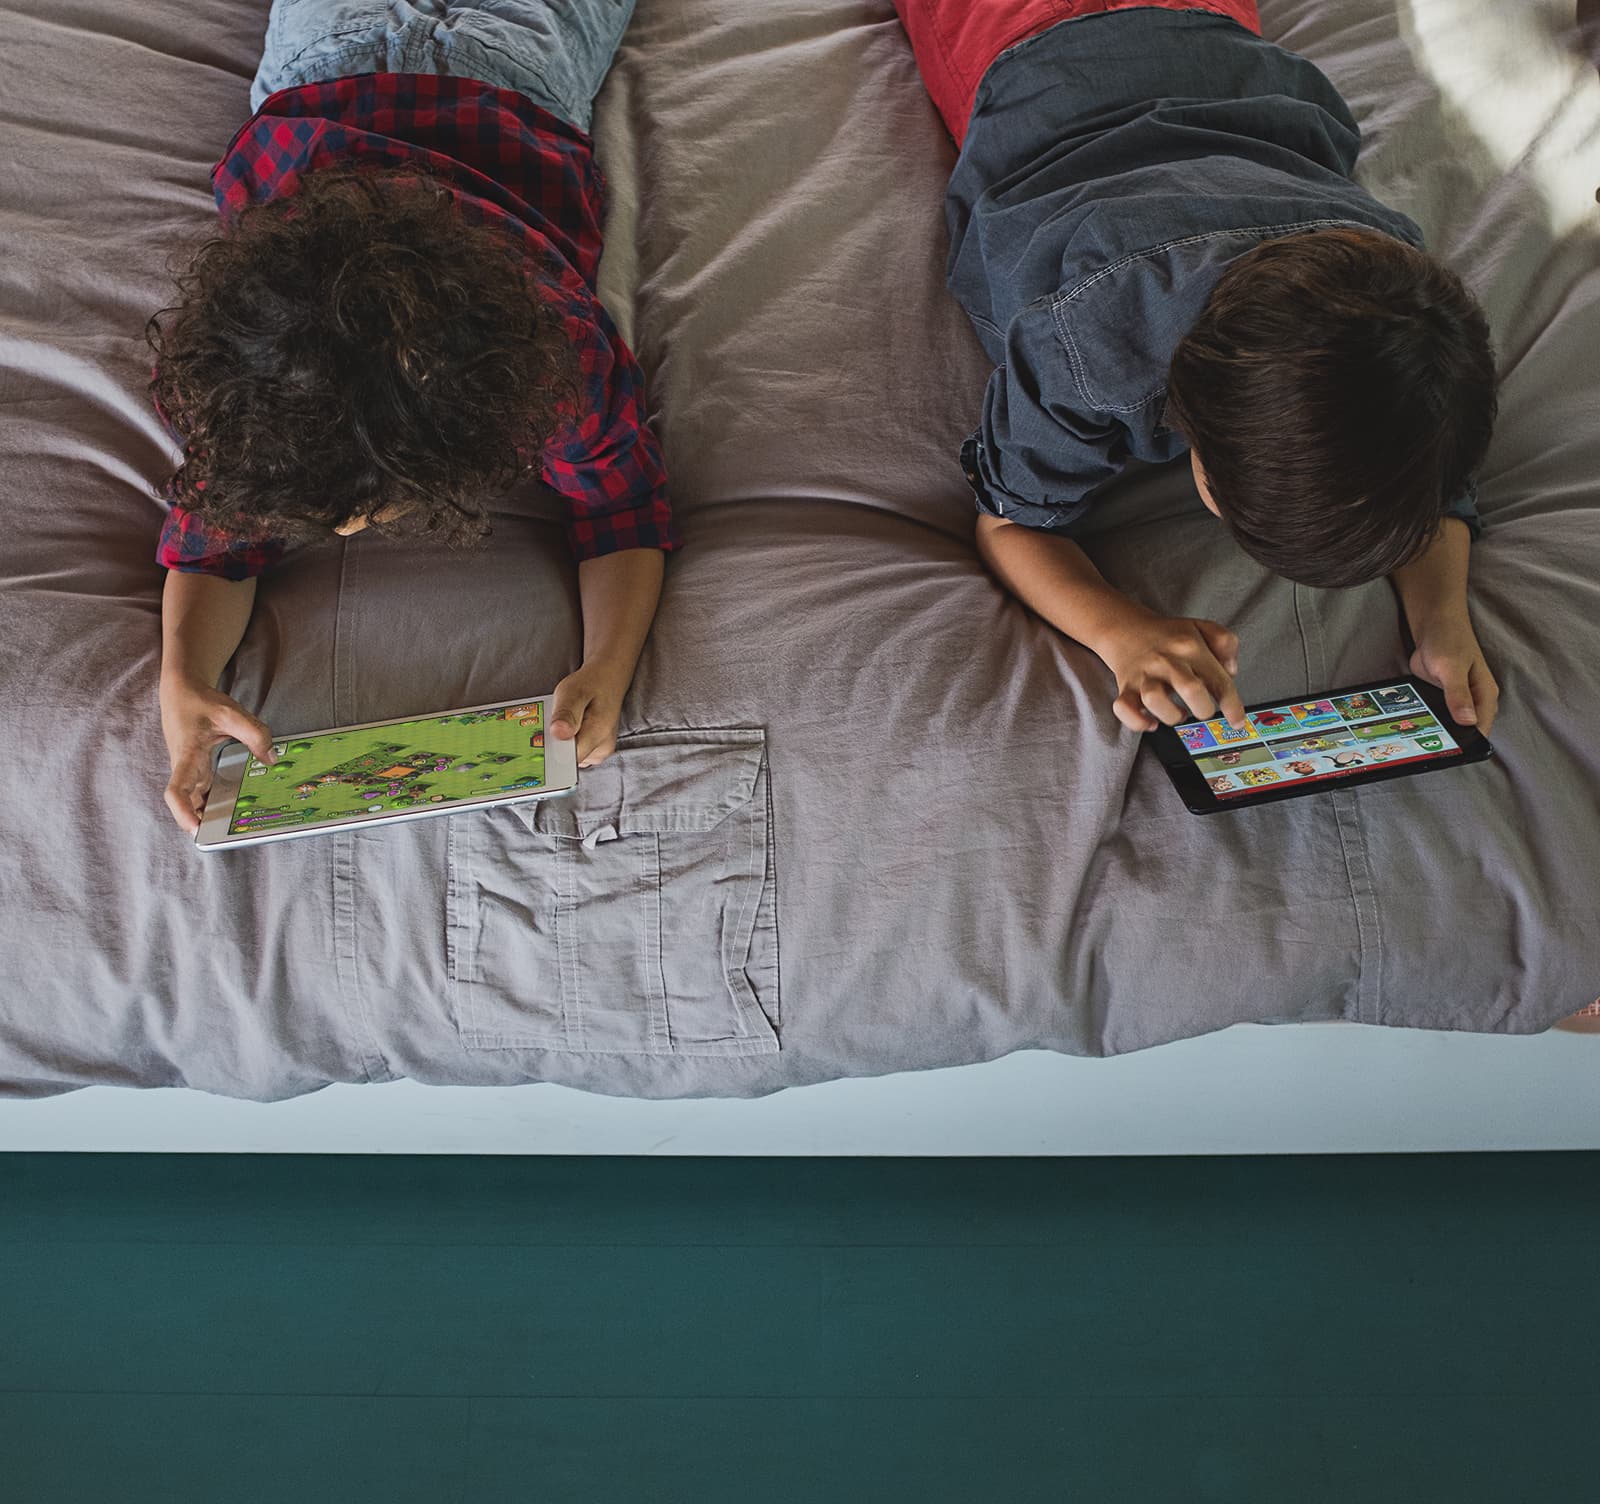 Parent Control Connected Devices Startup Circle Media Raises $10 Million